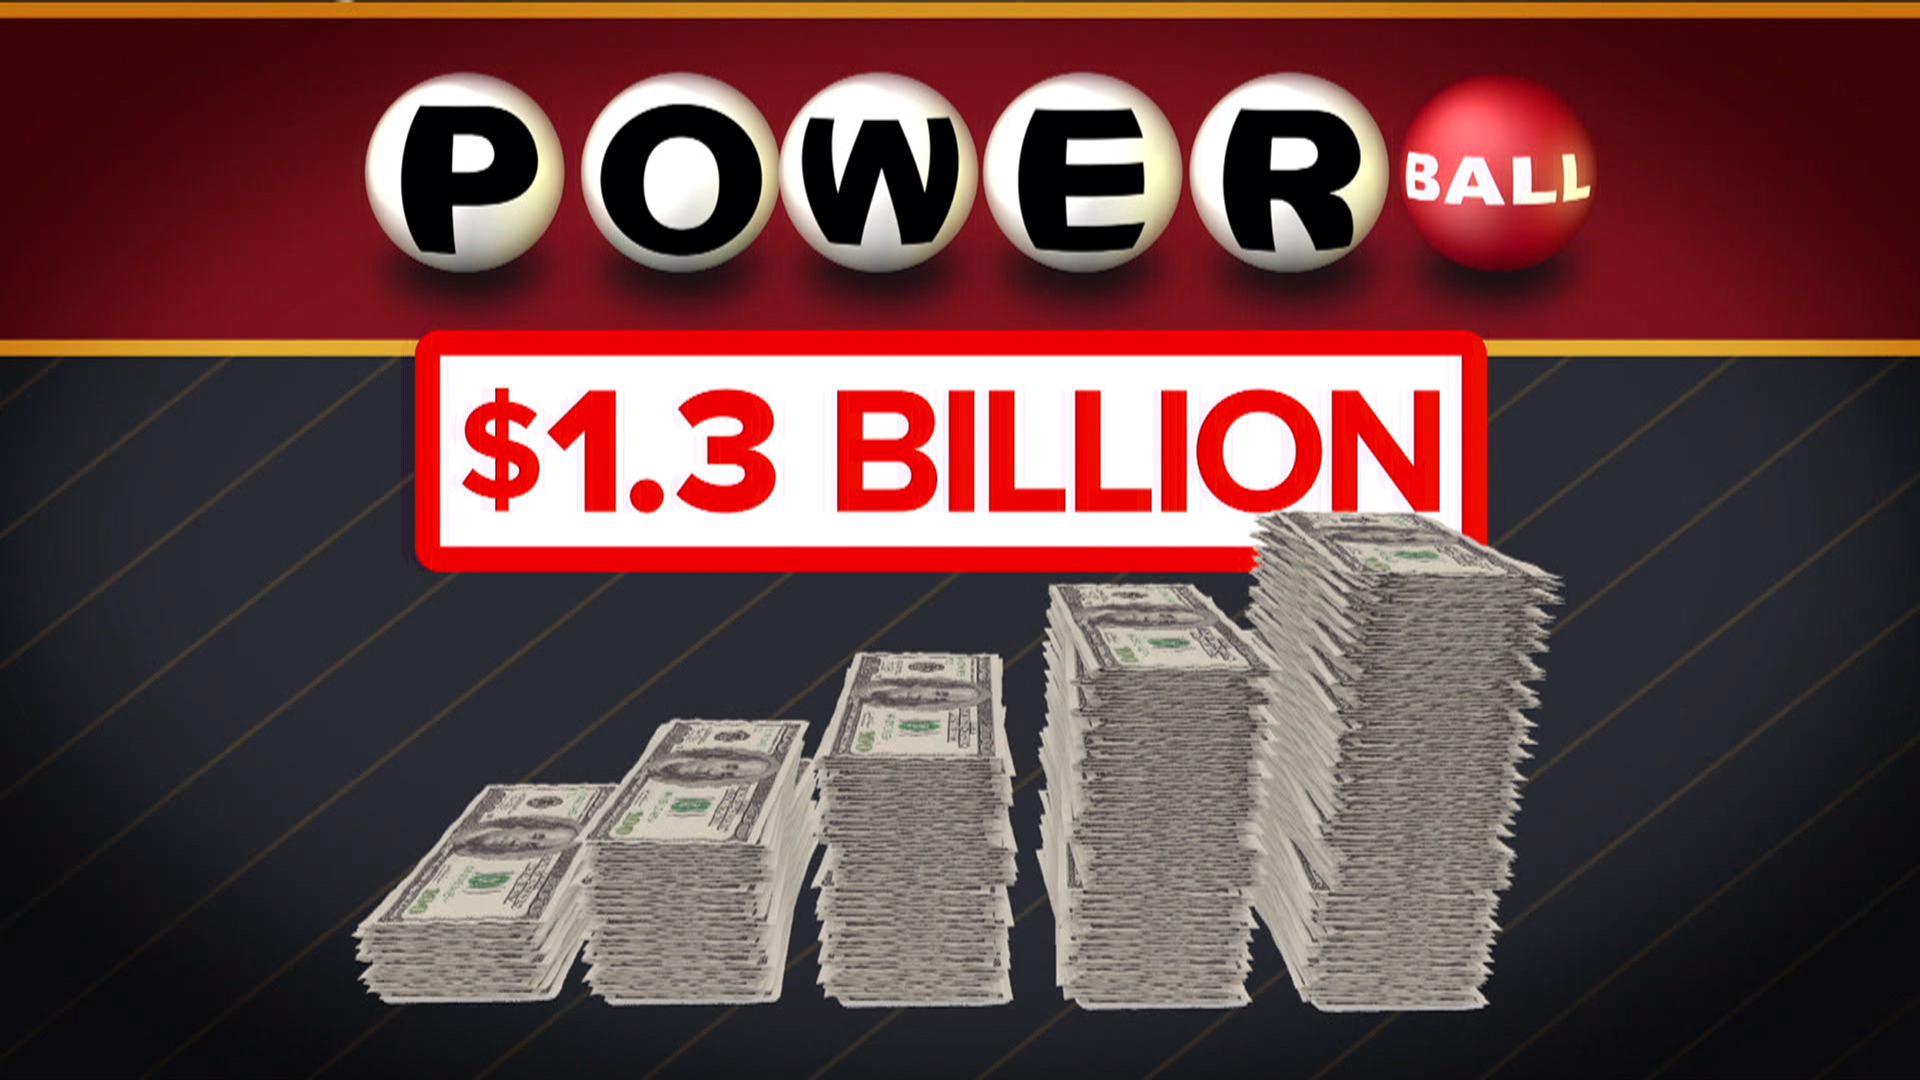 No Powerball jackpot winner, pot grows to $1.3 billion - TODAY.com1920 x 1080